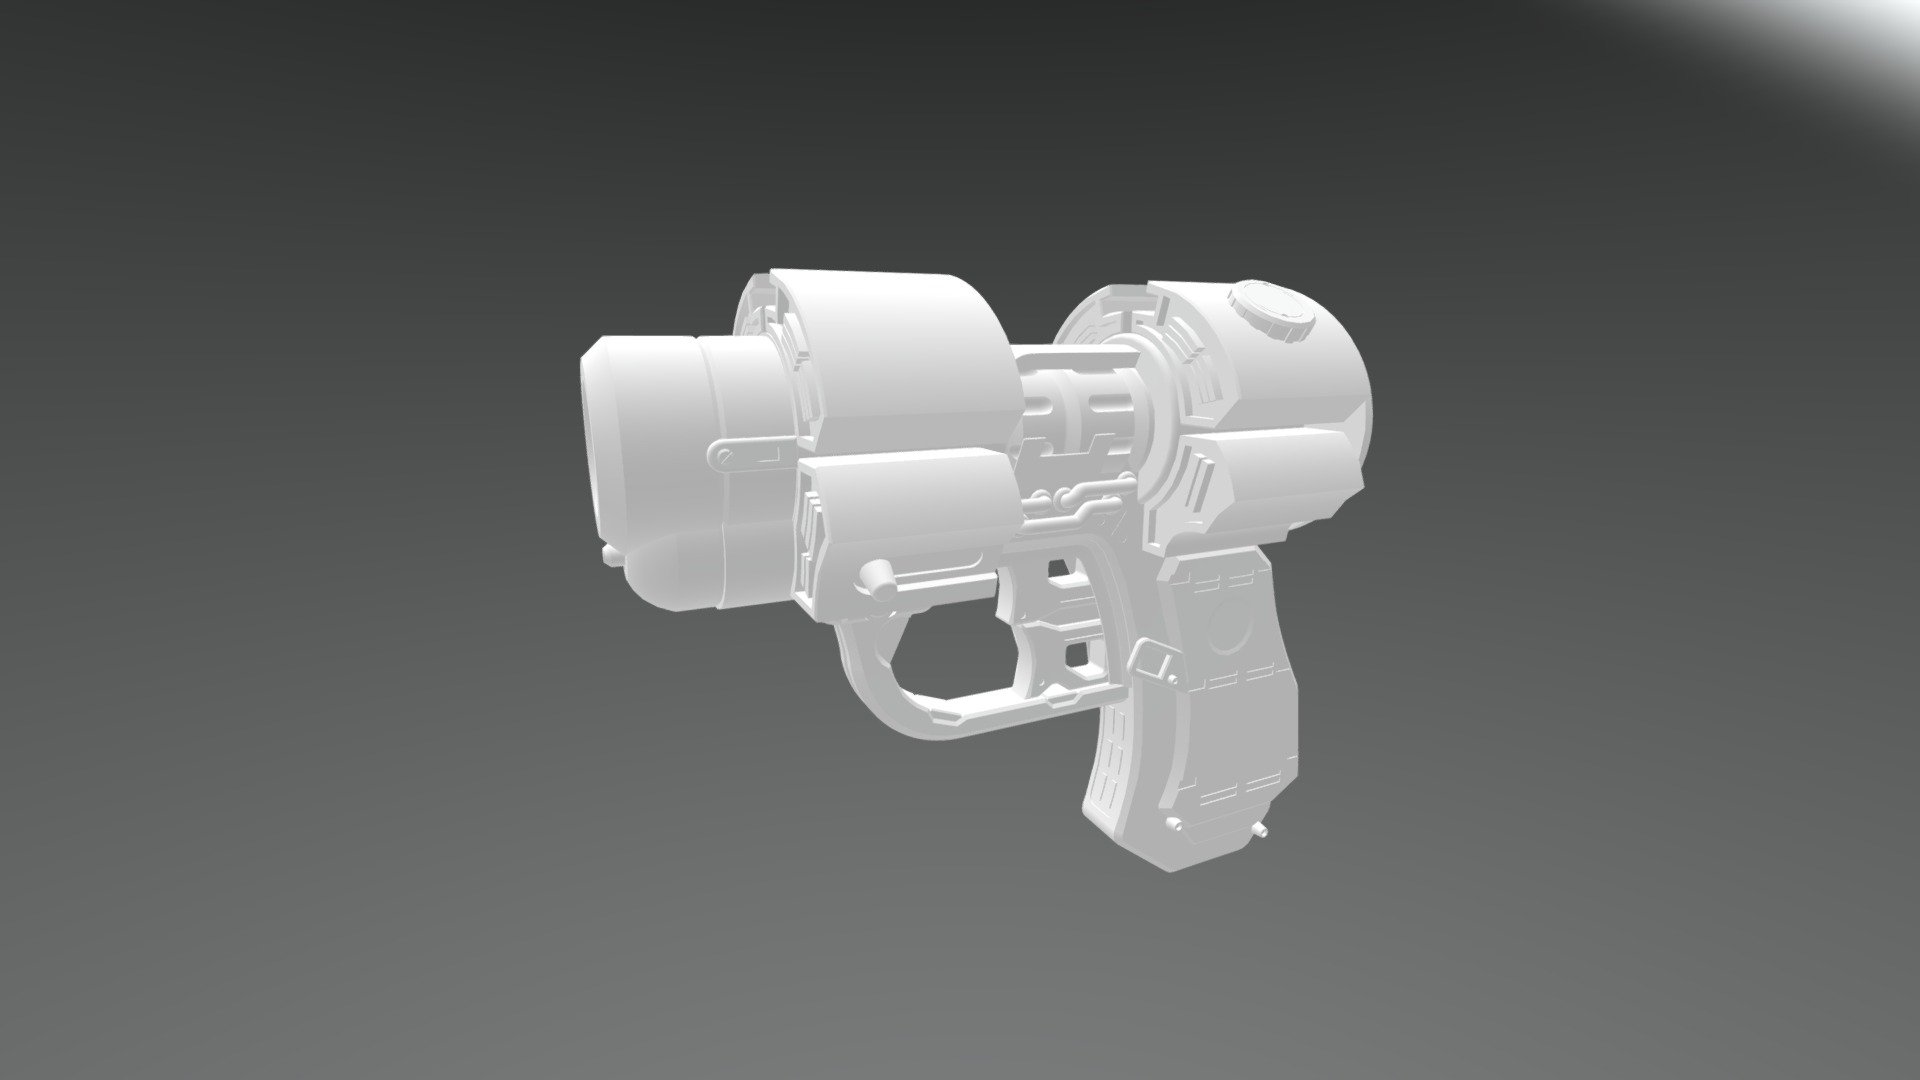 Gantz X Gun Download Free 3d Model By Psluca91 Psluca91 474b49d